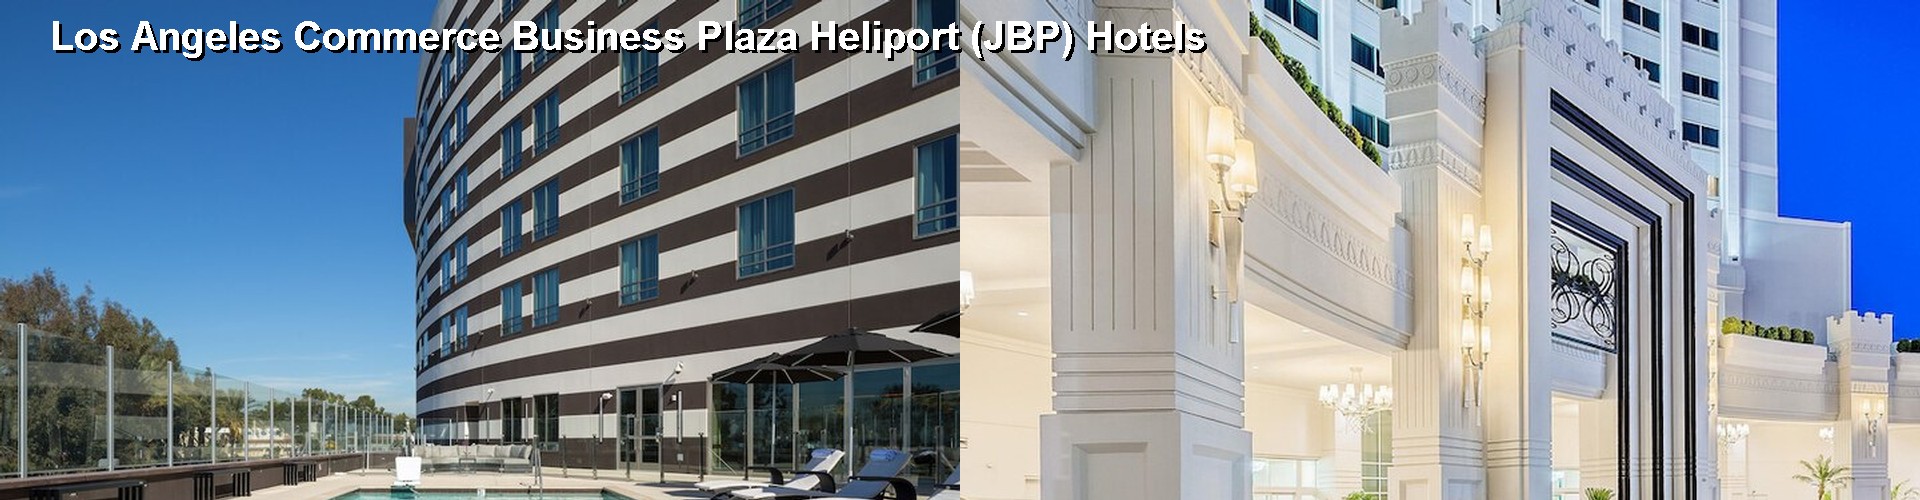 5 Best Hotels near Los Angeles Commerce Business Plaza Heliport (JBP)